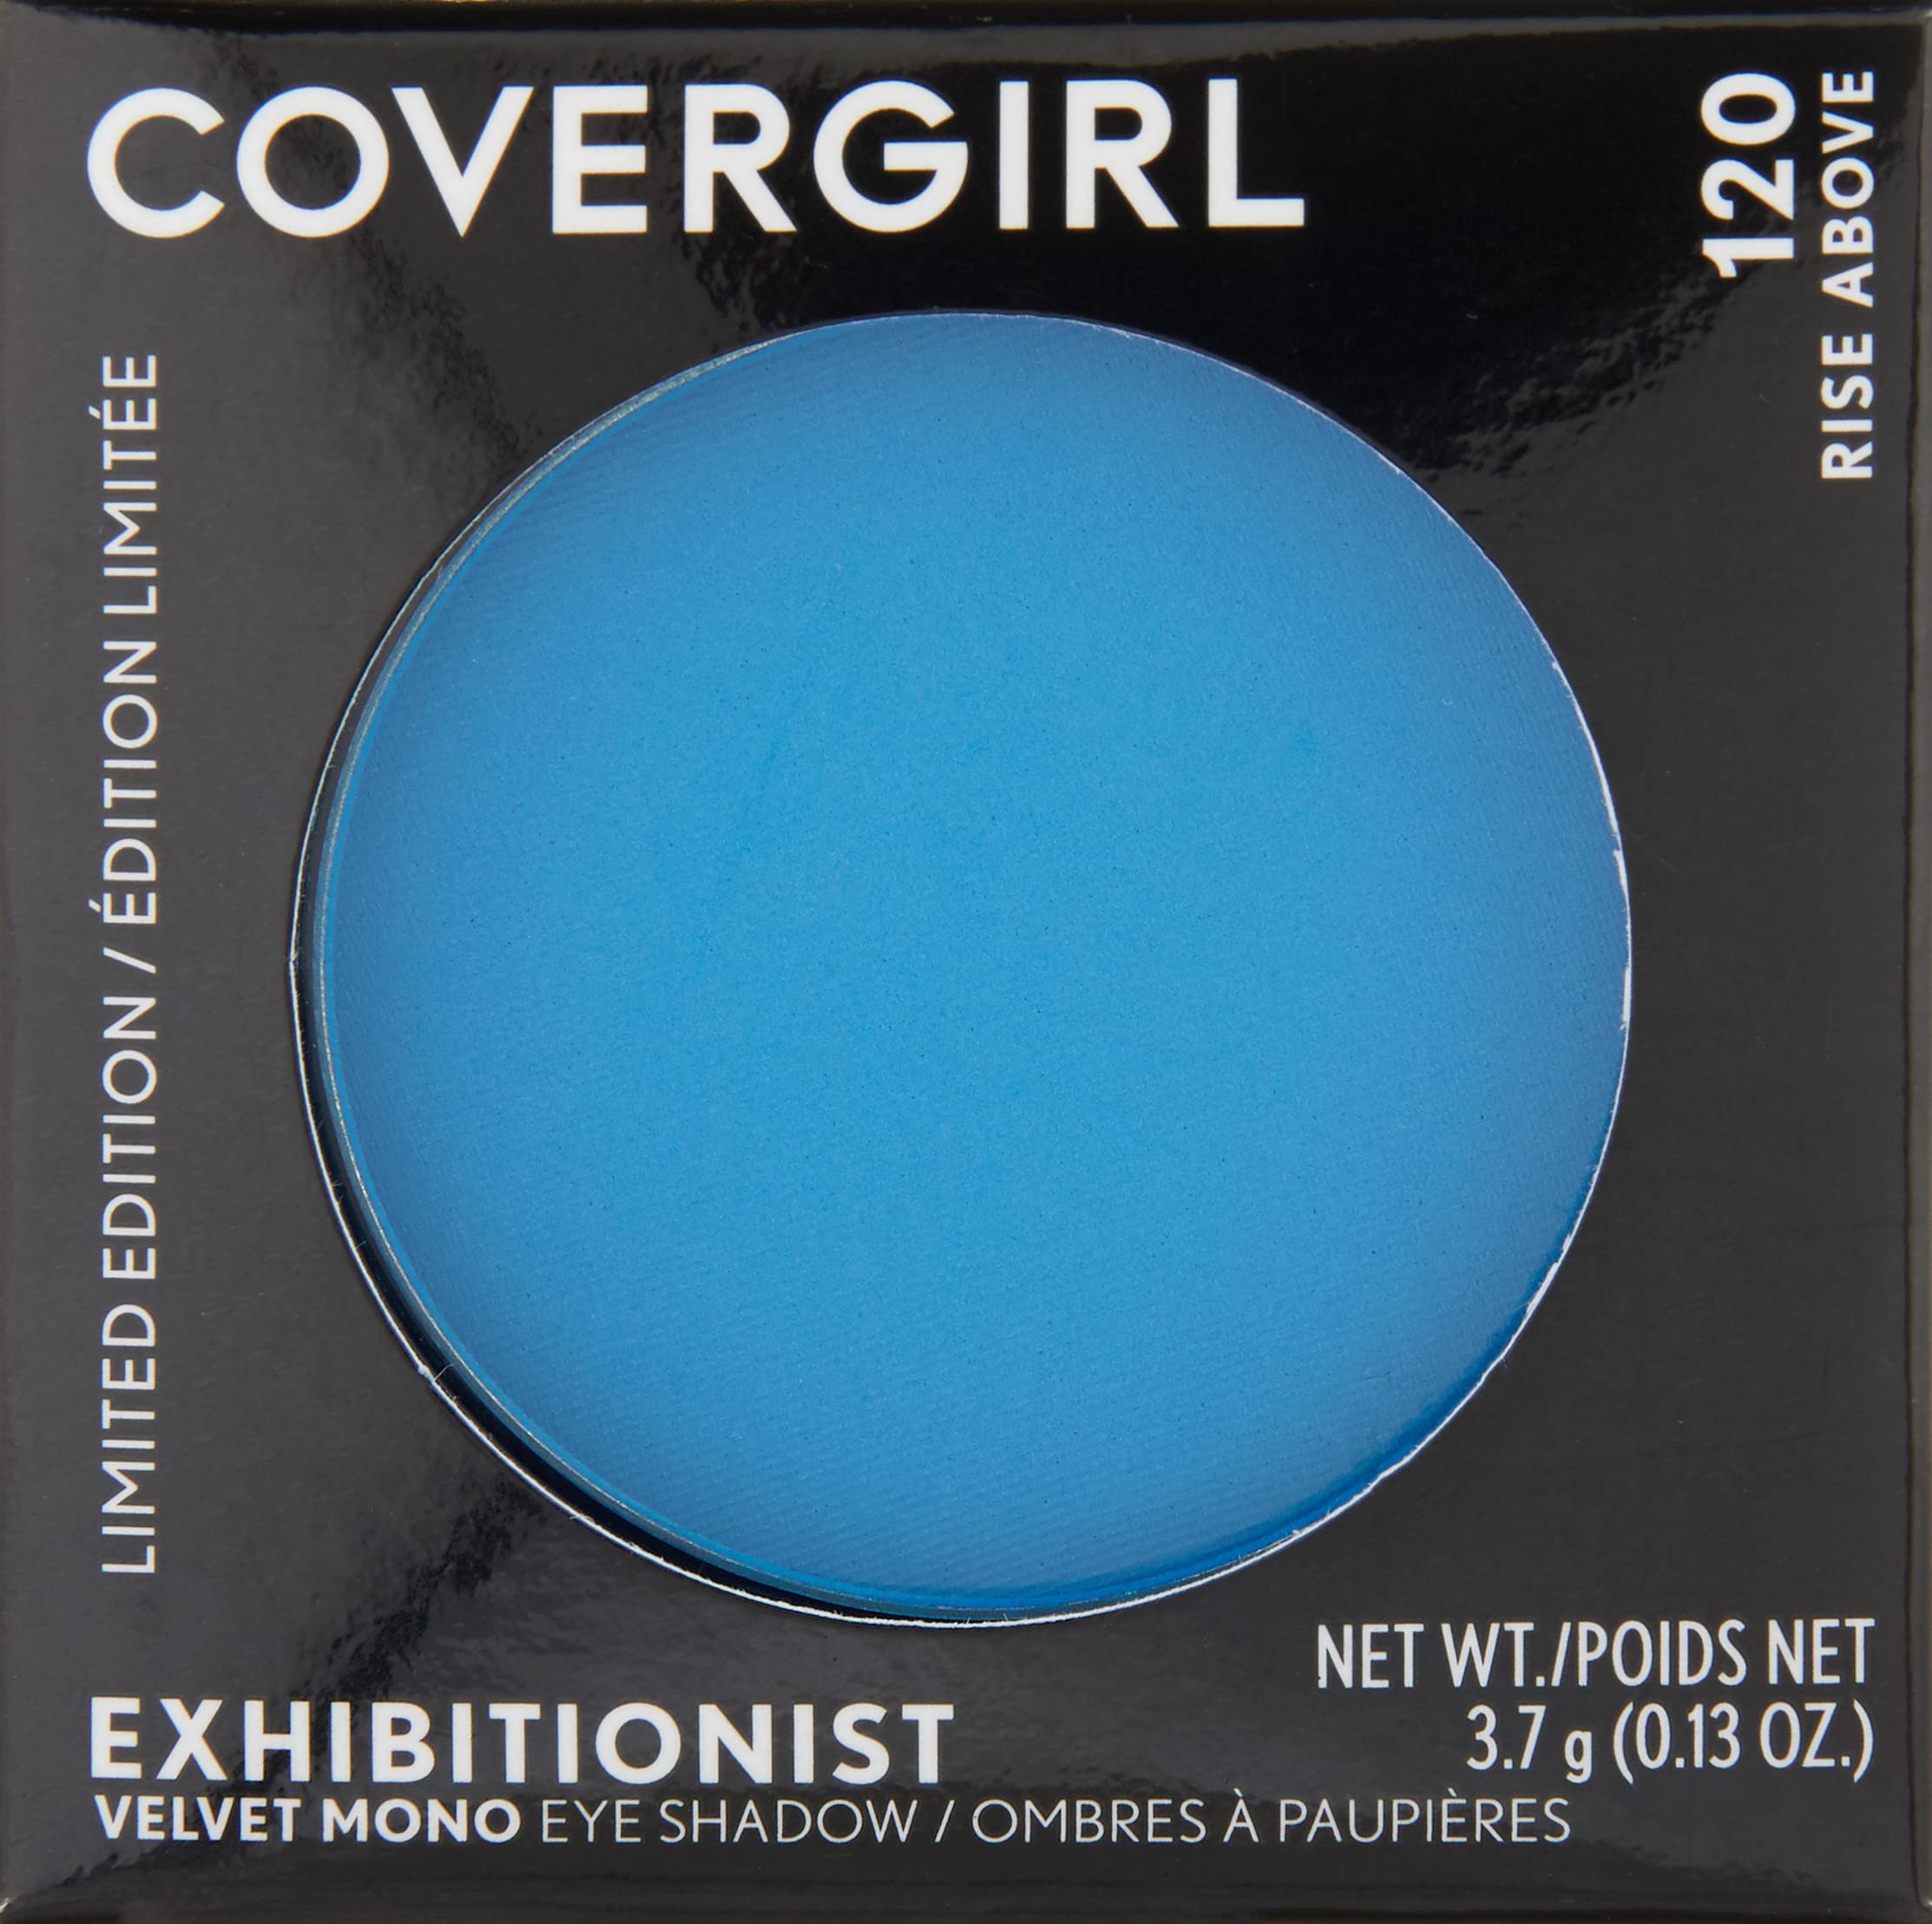 COVERGIRL Exhibitionist Velvet Mono Eye Shadow, Rise Above